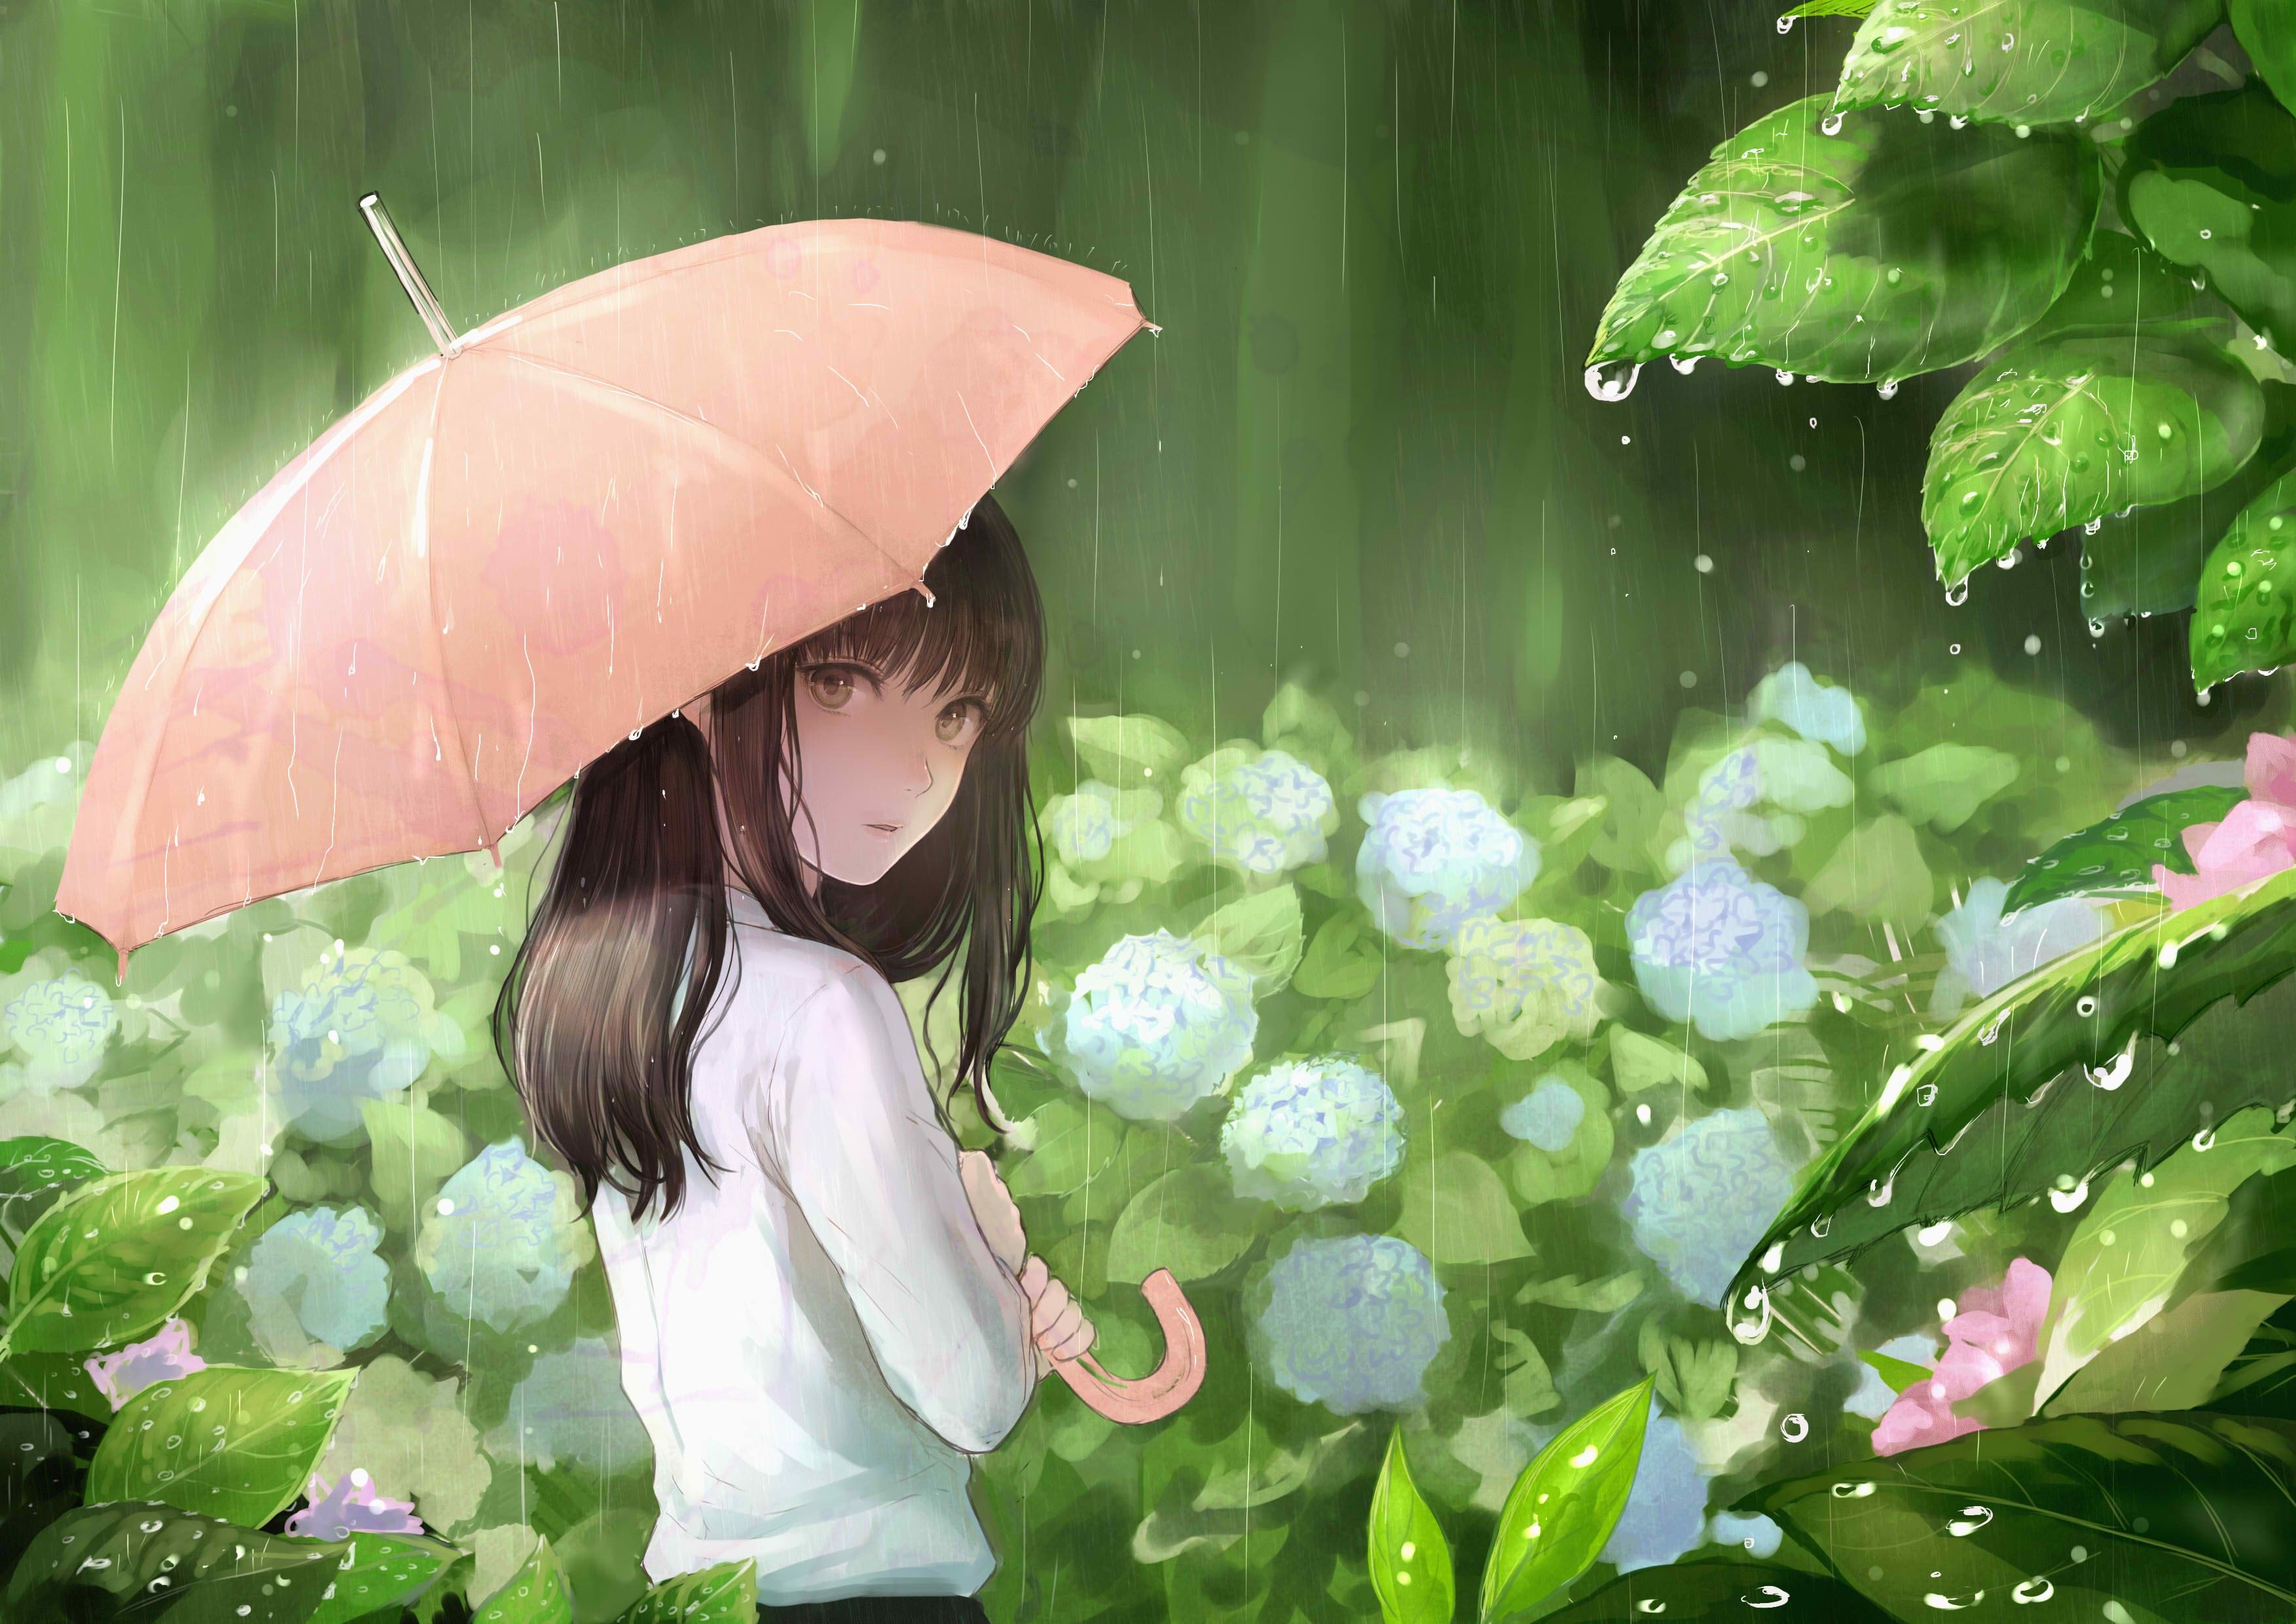 Umbrella HD Wallpaper and Background Image